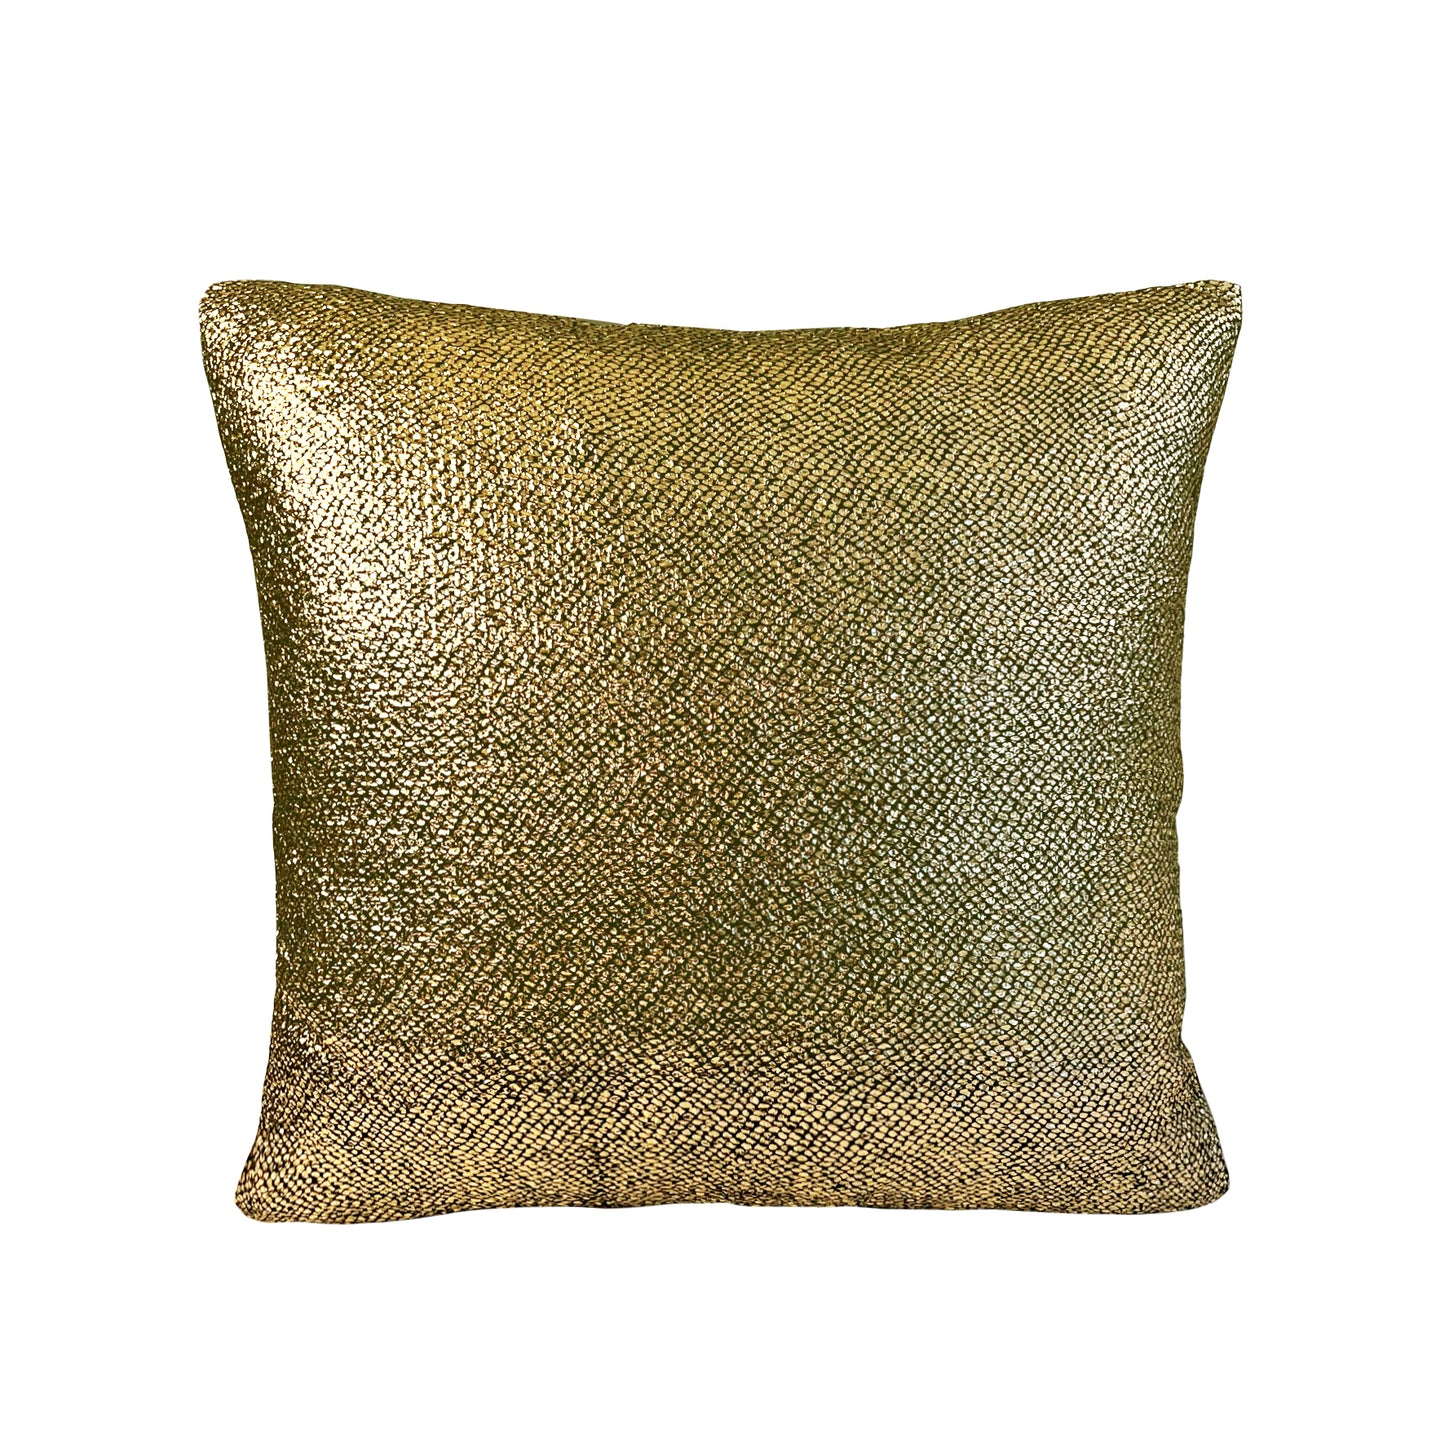 Marvelous Sparkle Pattern Decorative Accent Throw Pillow